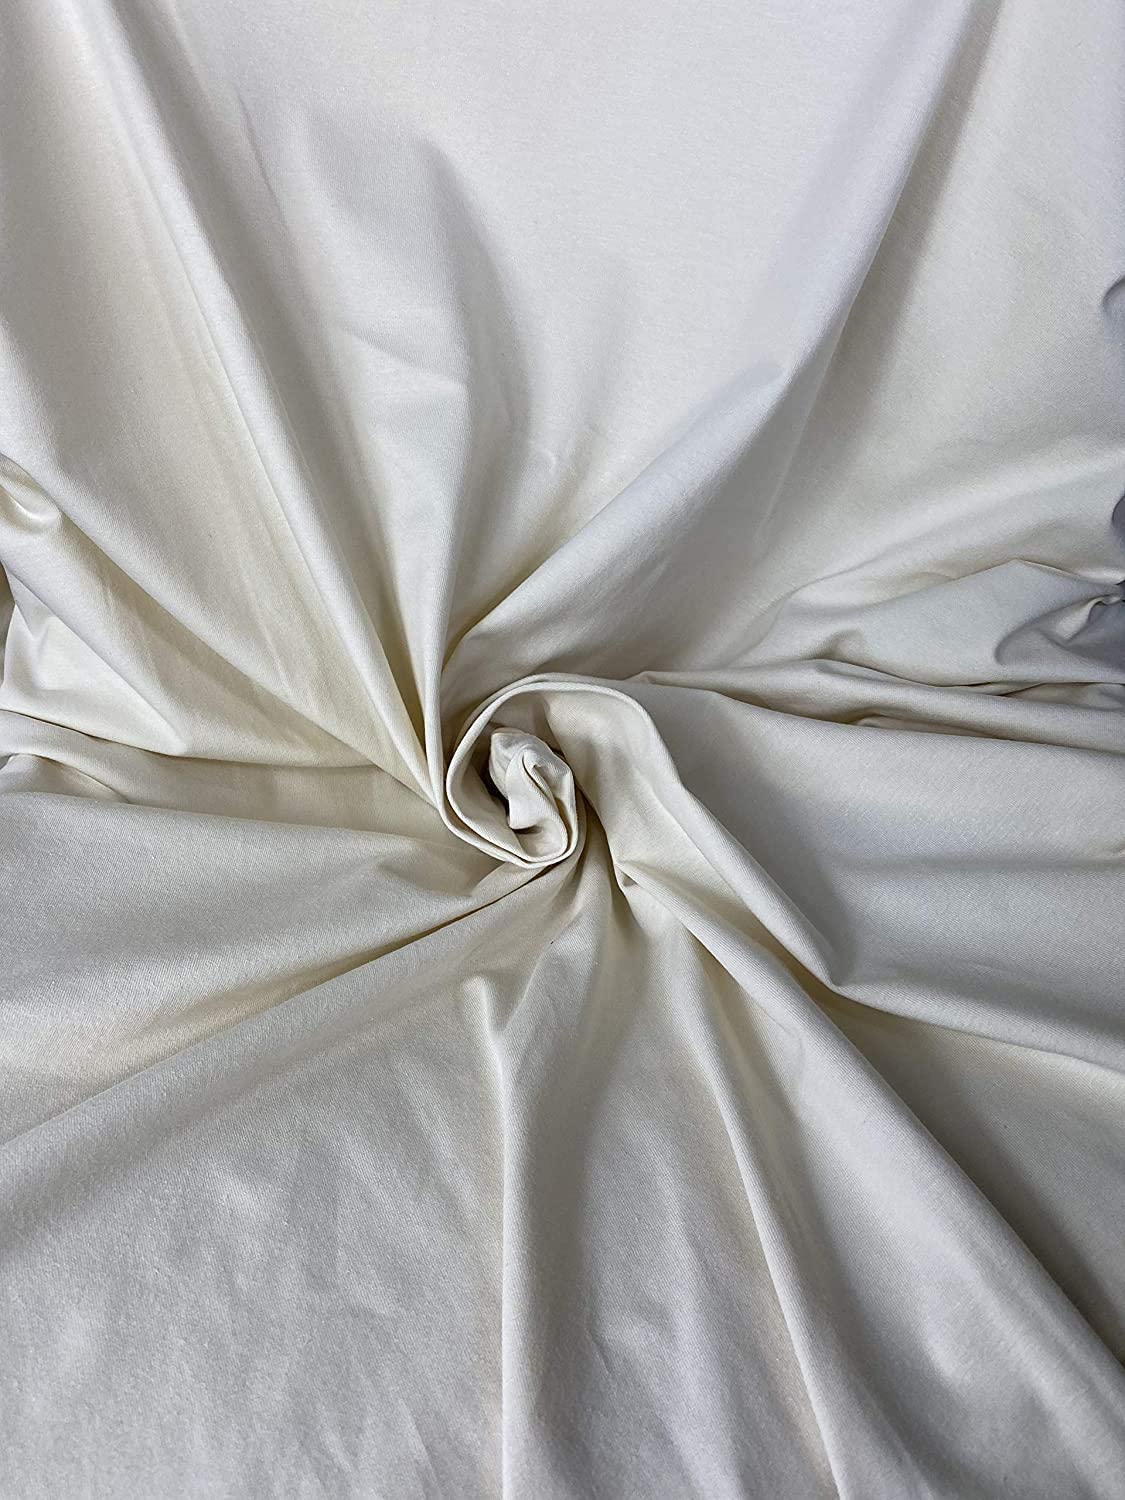 58/60" Wide, 95% Cotton 5% Spandex, Cotton Jersey Spandex Knit Blend, 4 Way Stretch Fabric (Ivory, 1 Yard)